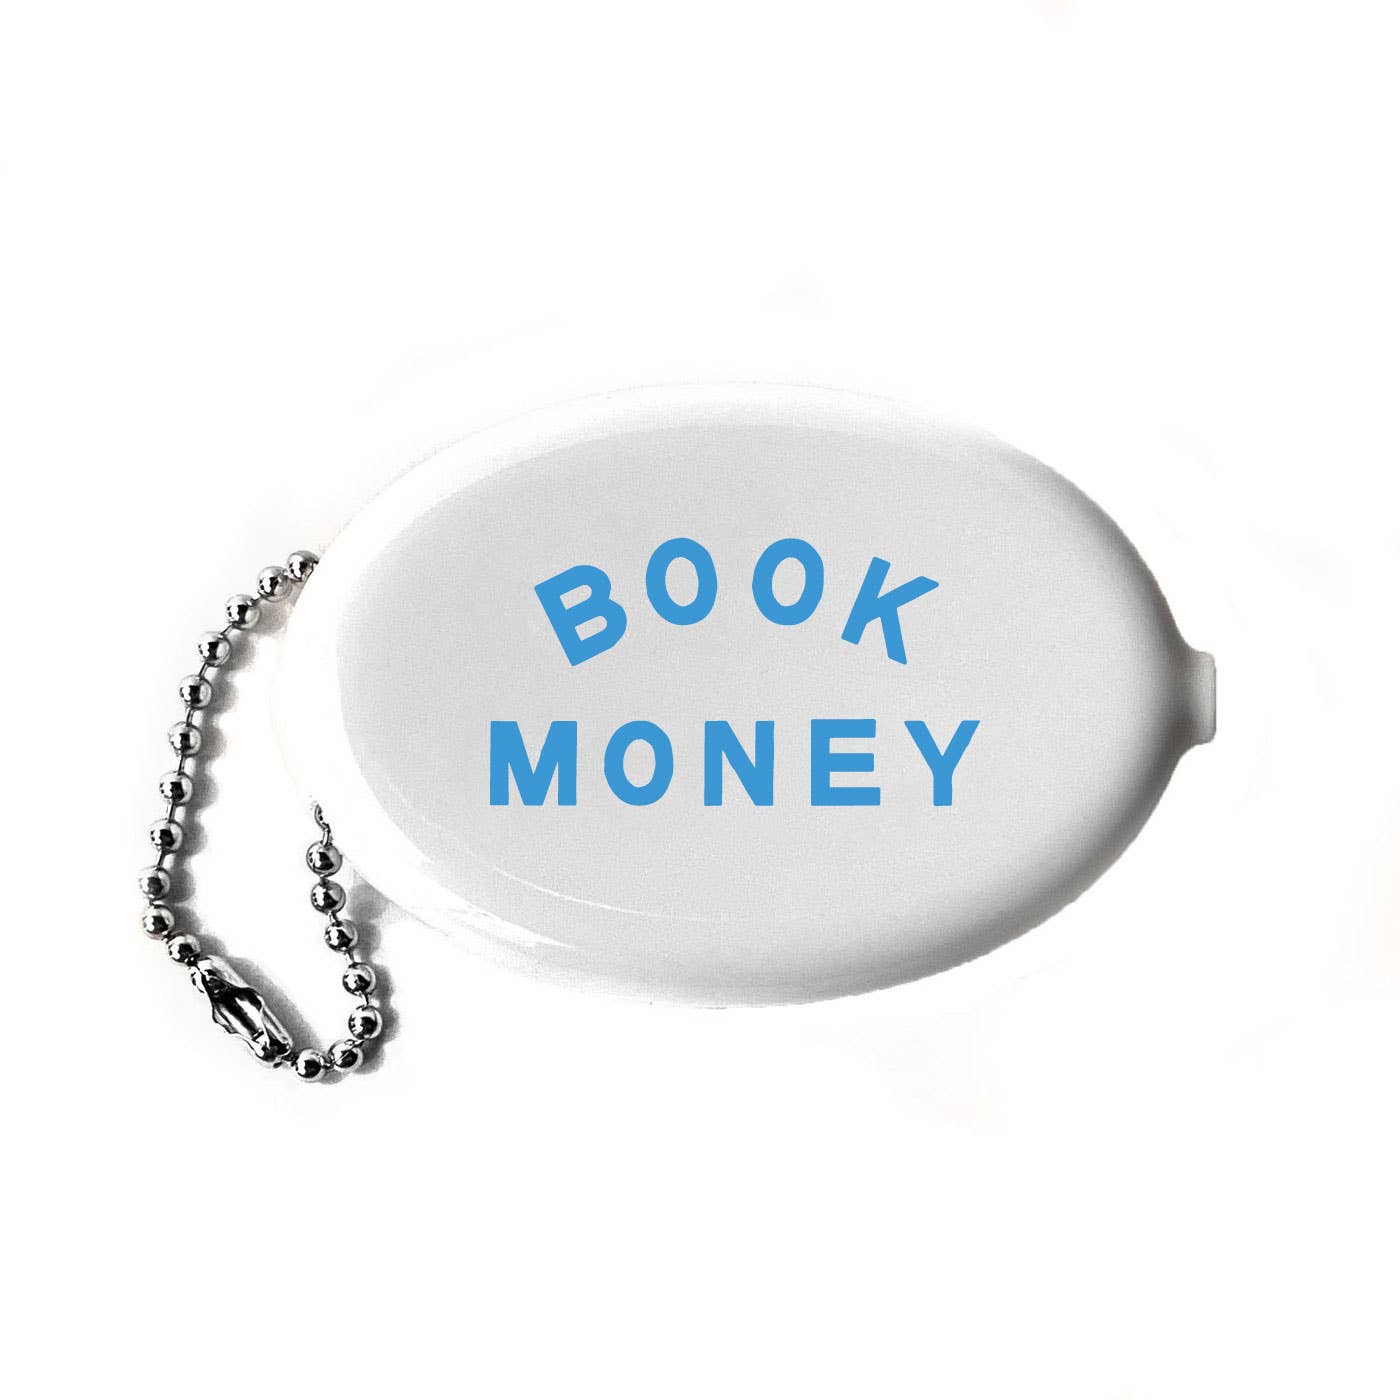 "Book Money" Coin Pouch